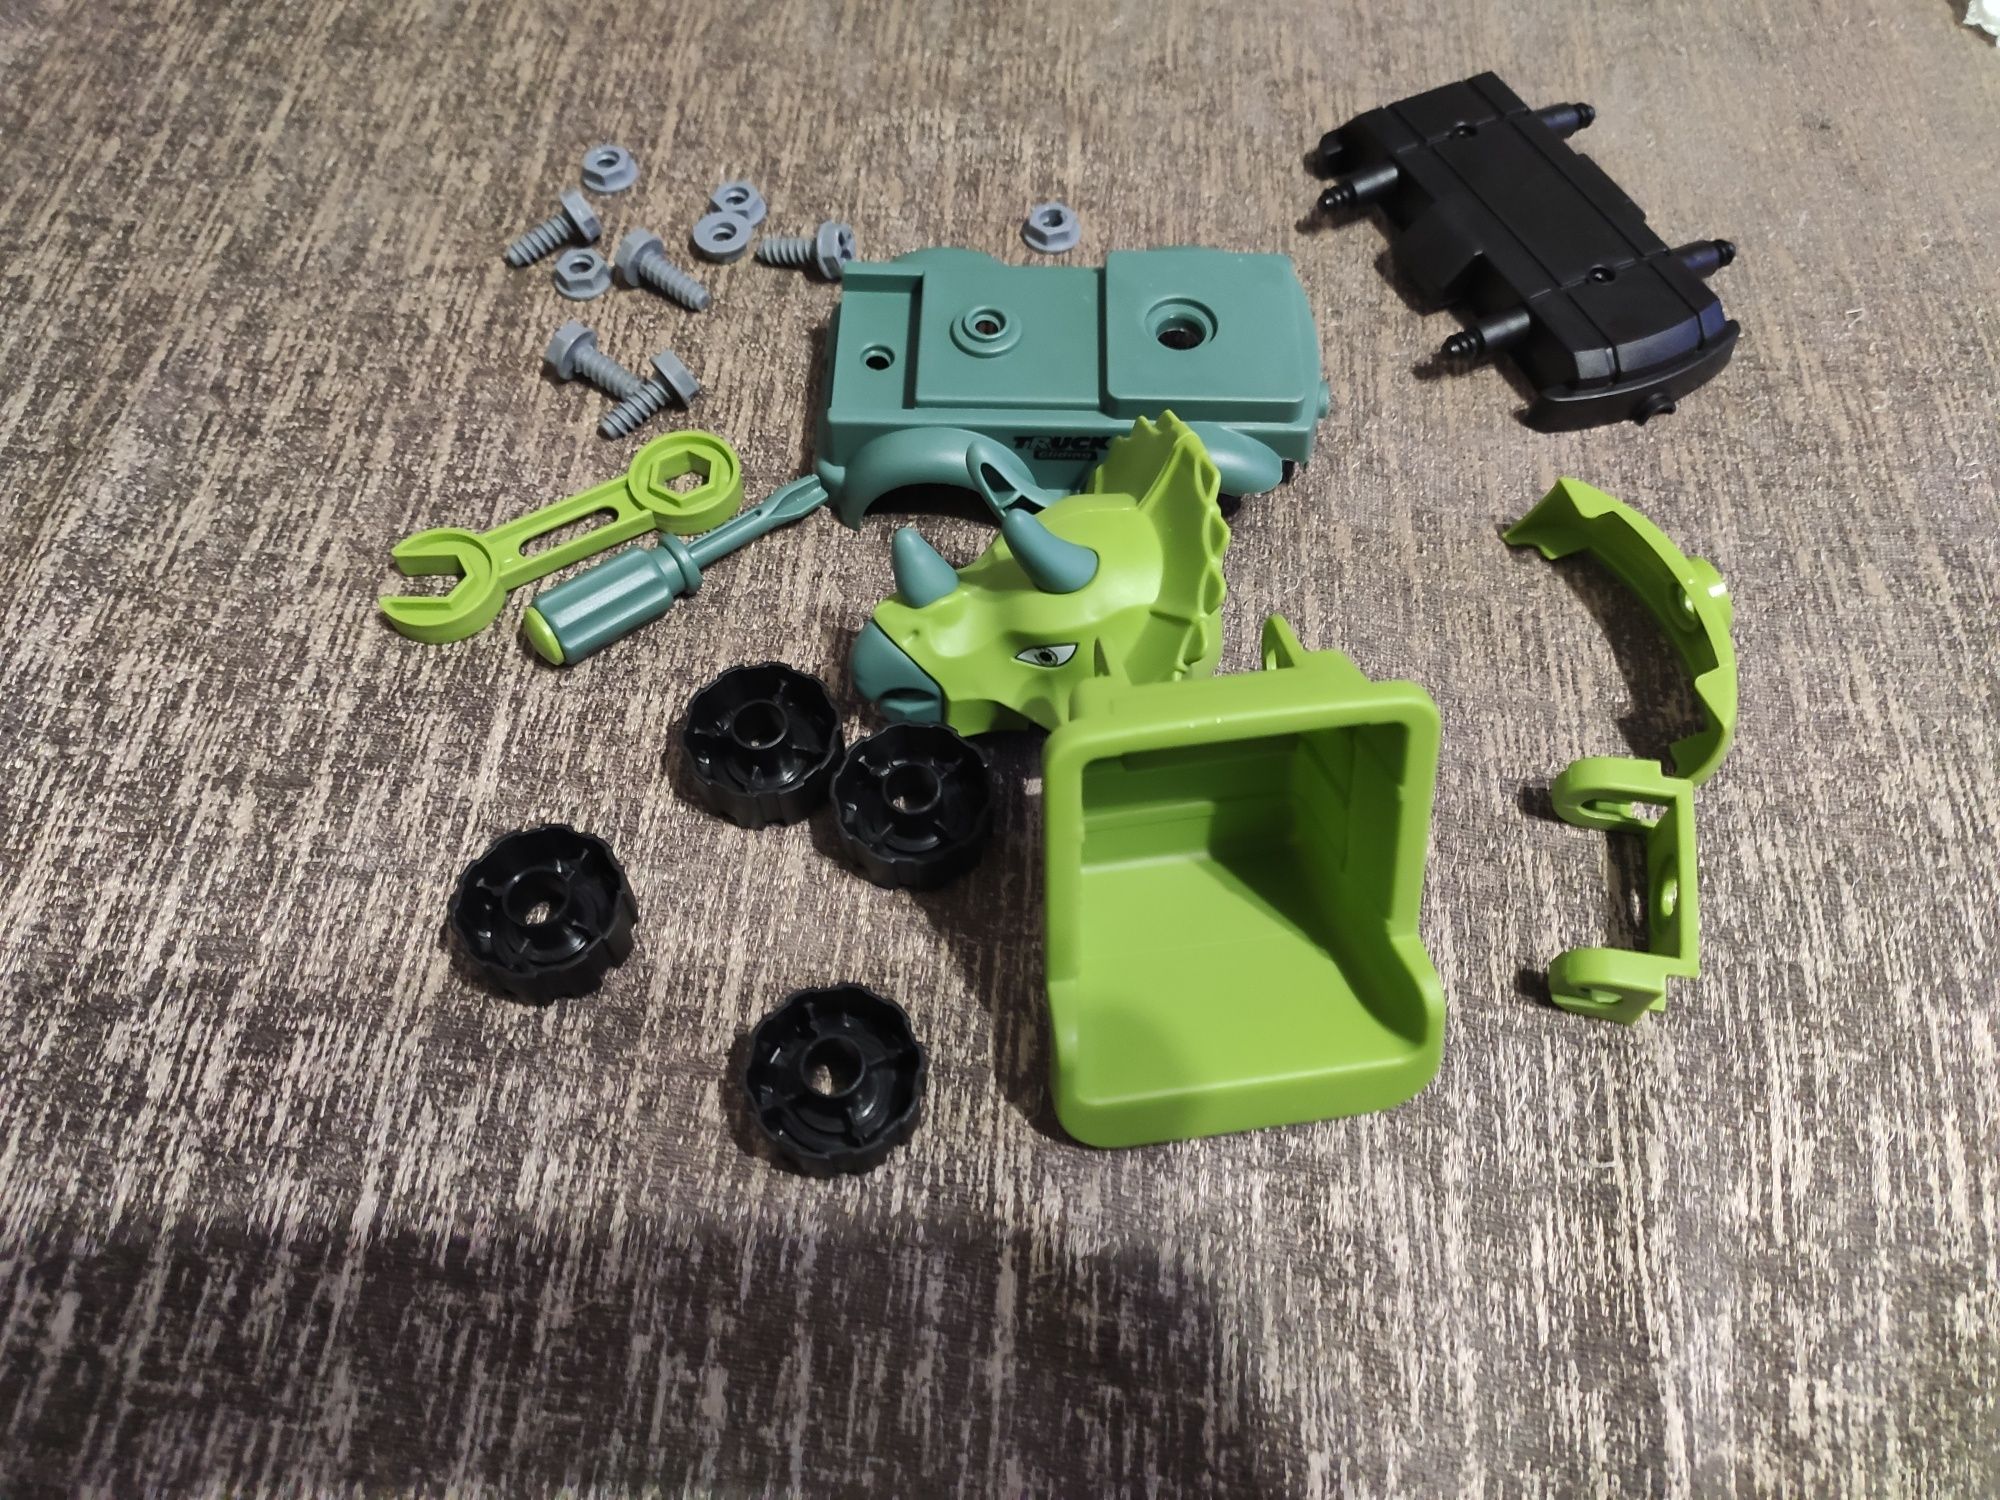 Машинка динозавр іграшка игрушка конструктор з викруткою та ключем